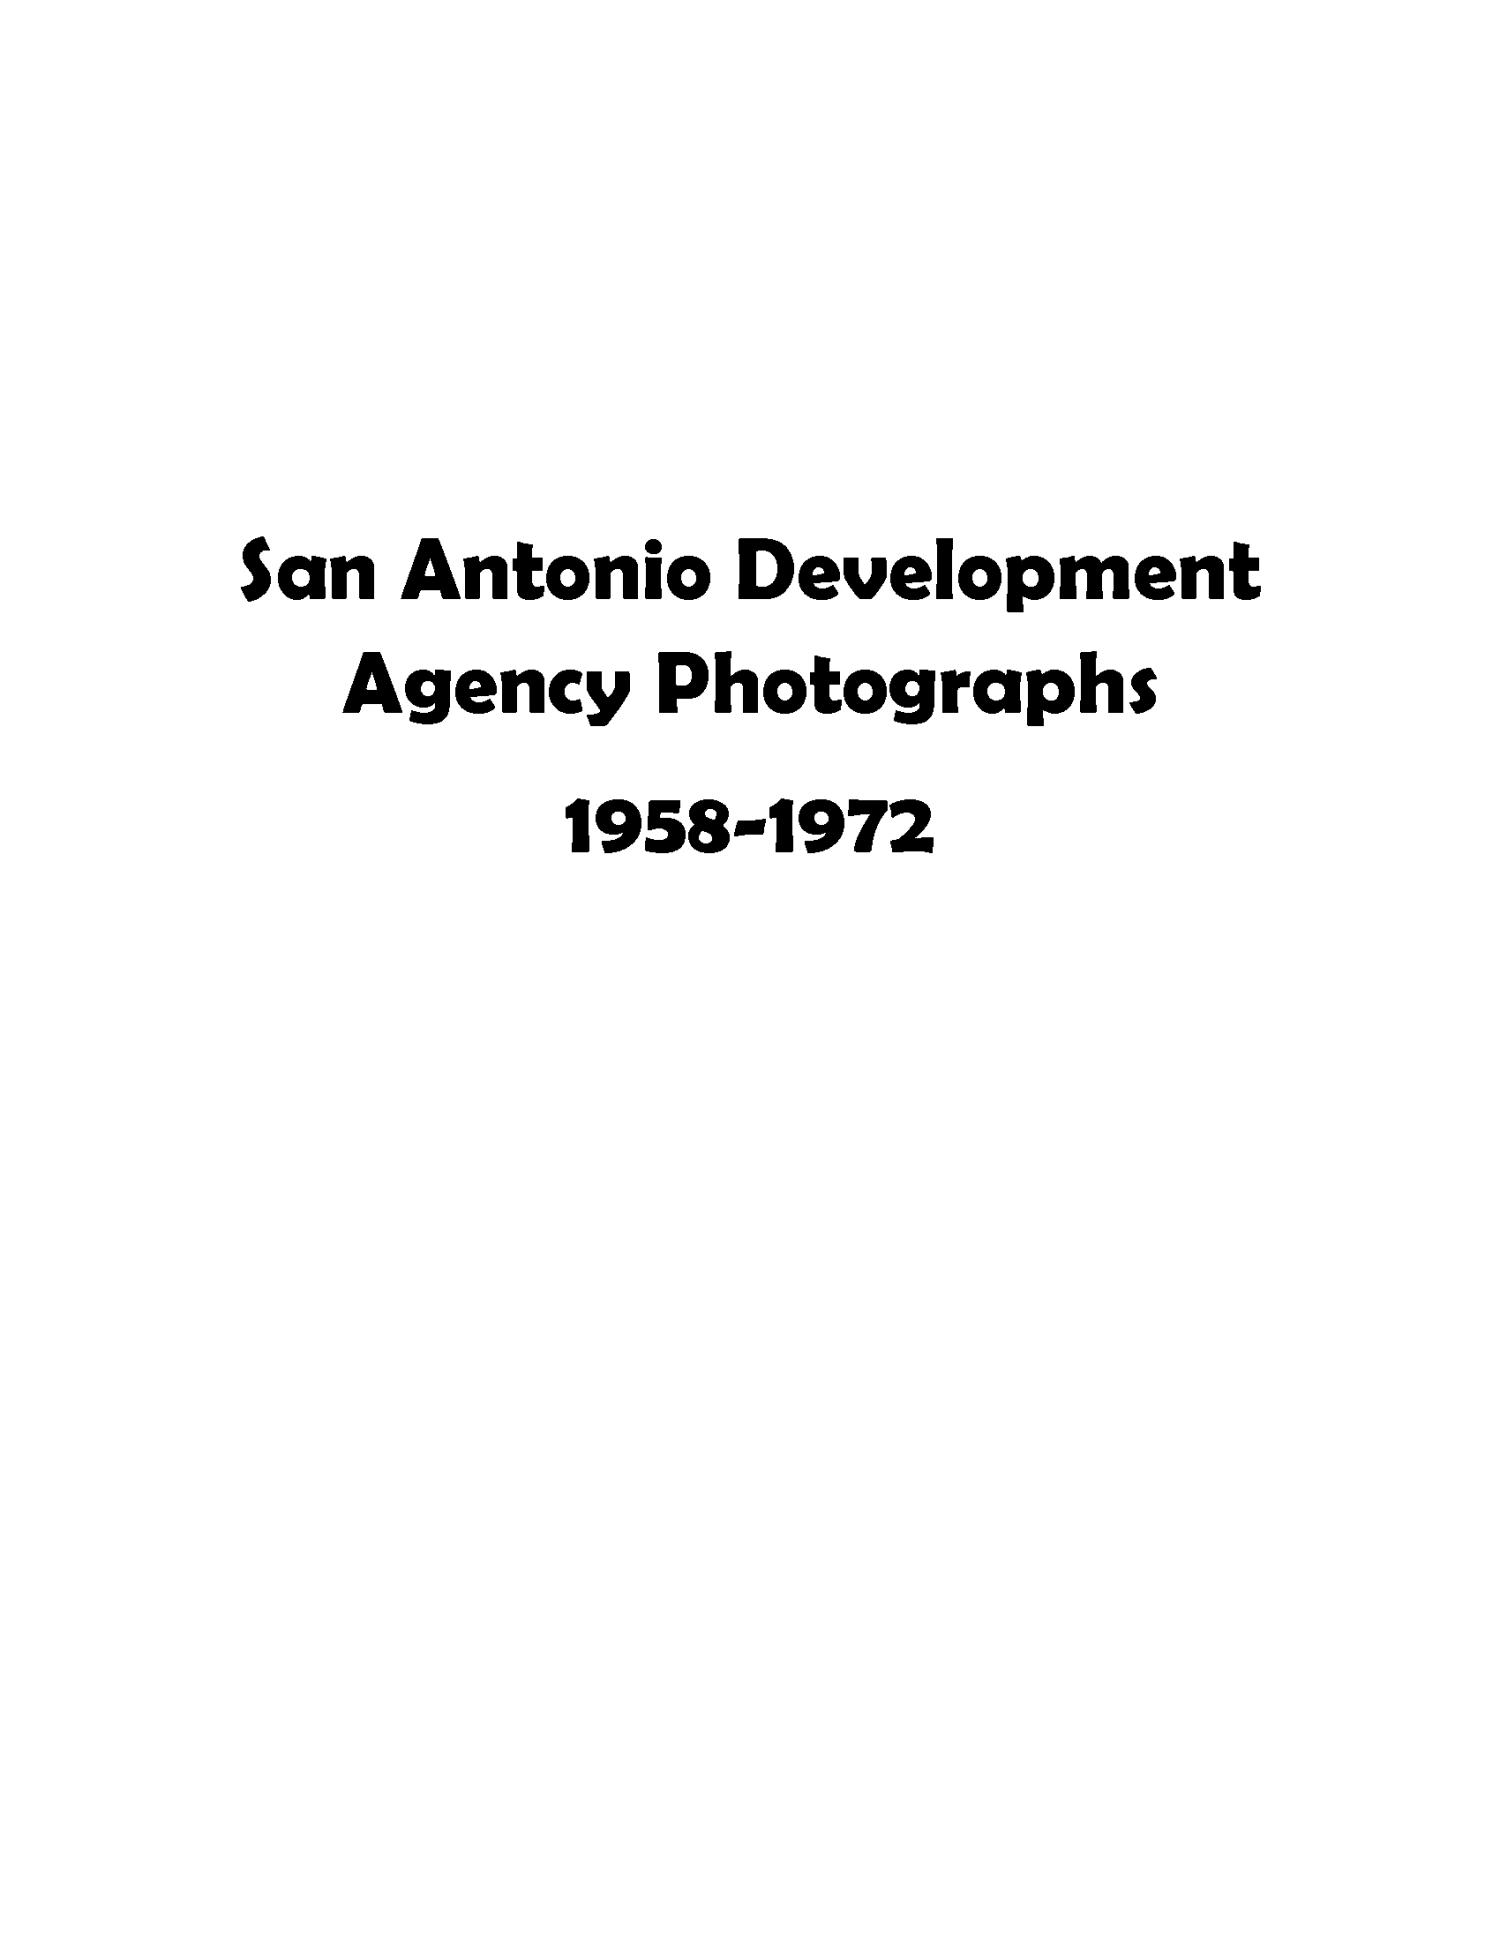 San Antonio Urban Renewal Project, Book 9
                                                
                                                    Title Page
                                                